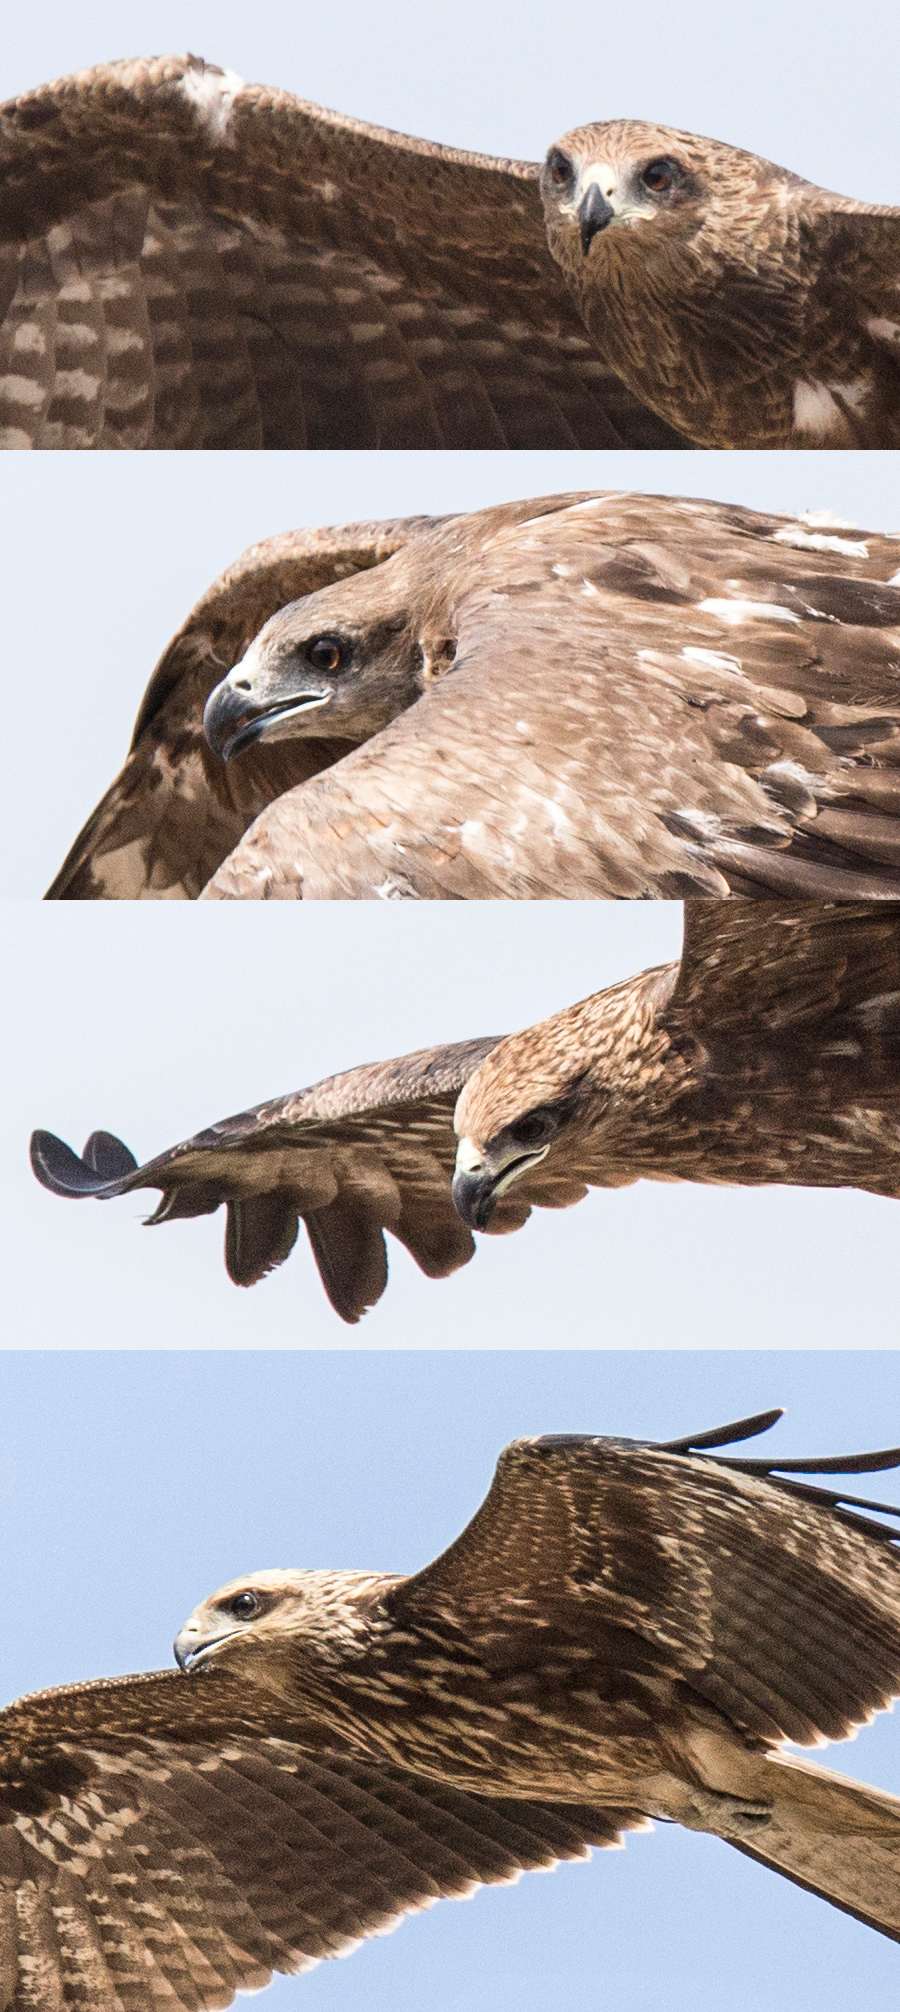 bird prey Hunt Hunting hawk falcon eagle oiseau aigle danger proie animal oiseaux animaux vol